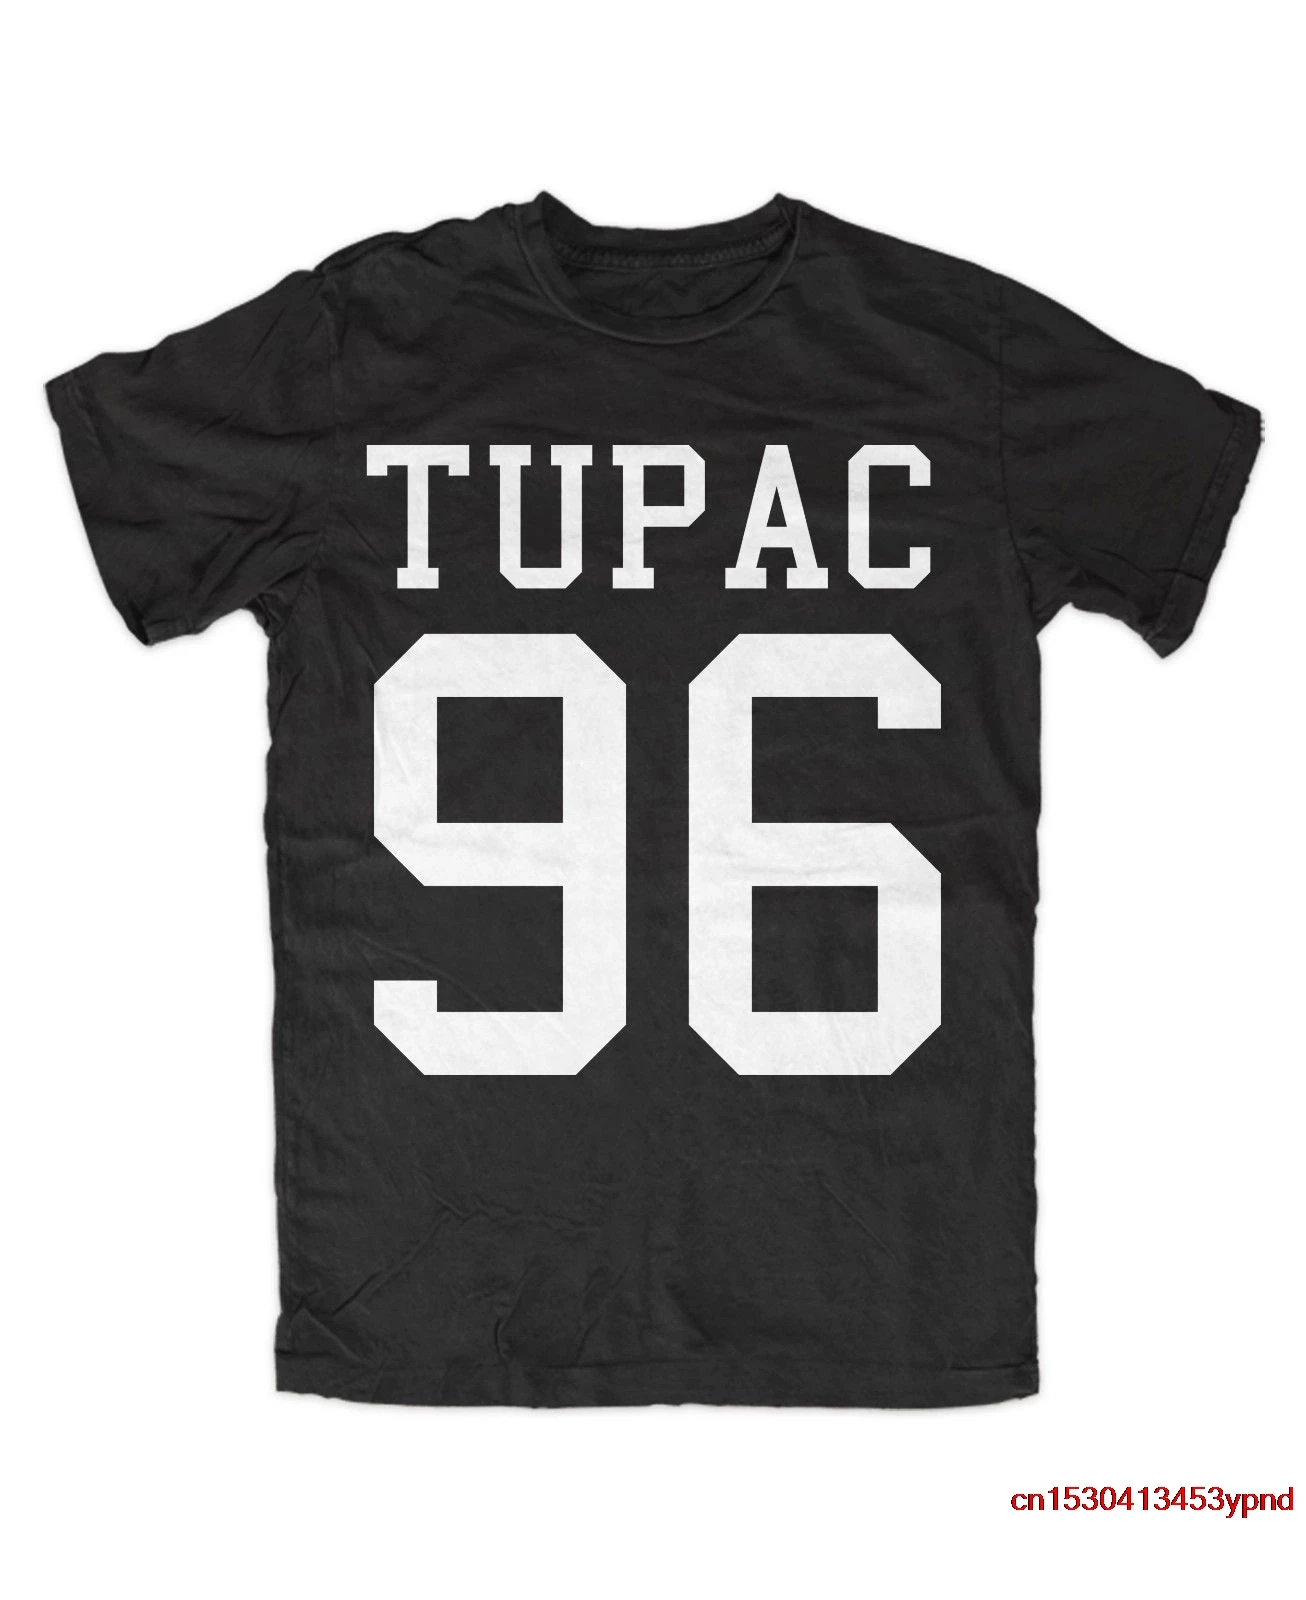 

Tupac 96 T-Shirt Black 2Pac Makaveli West Coast Hip Hop Swag Asap RIP Hip Hop tee man's t-shirt